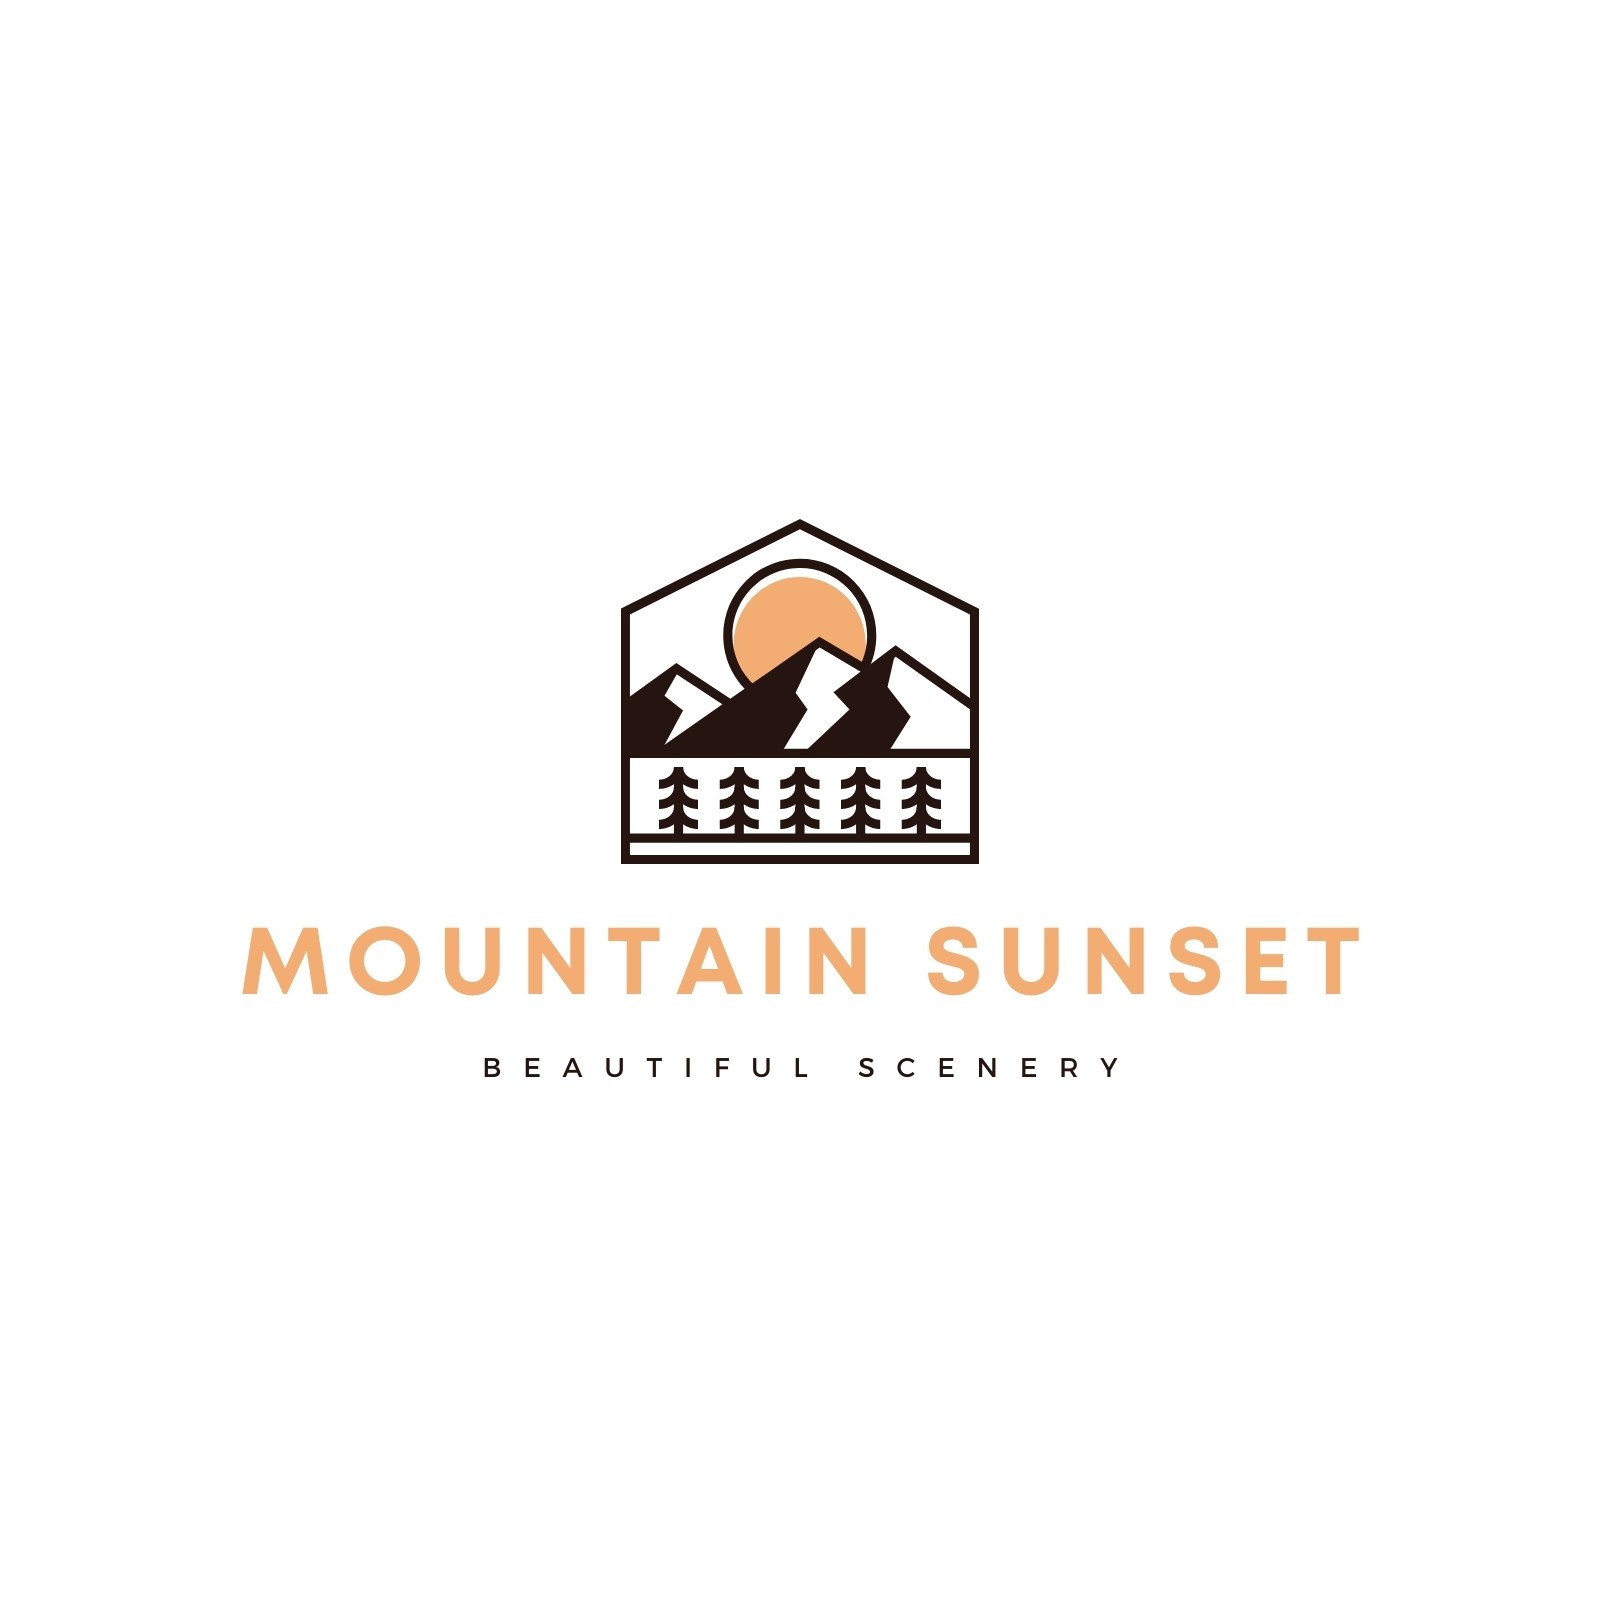 Sunset Logos - 275+ Best Sunset Logo Ideas. Free Sunset Logo Maker. |  99designs